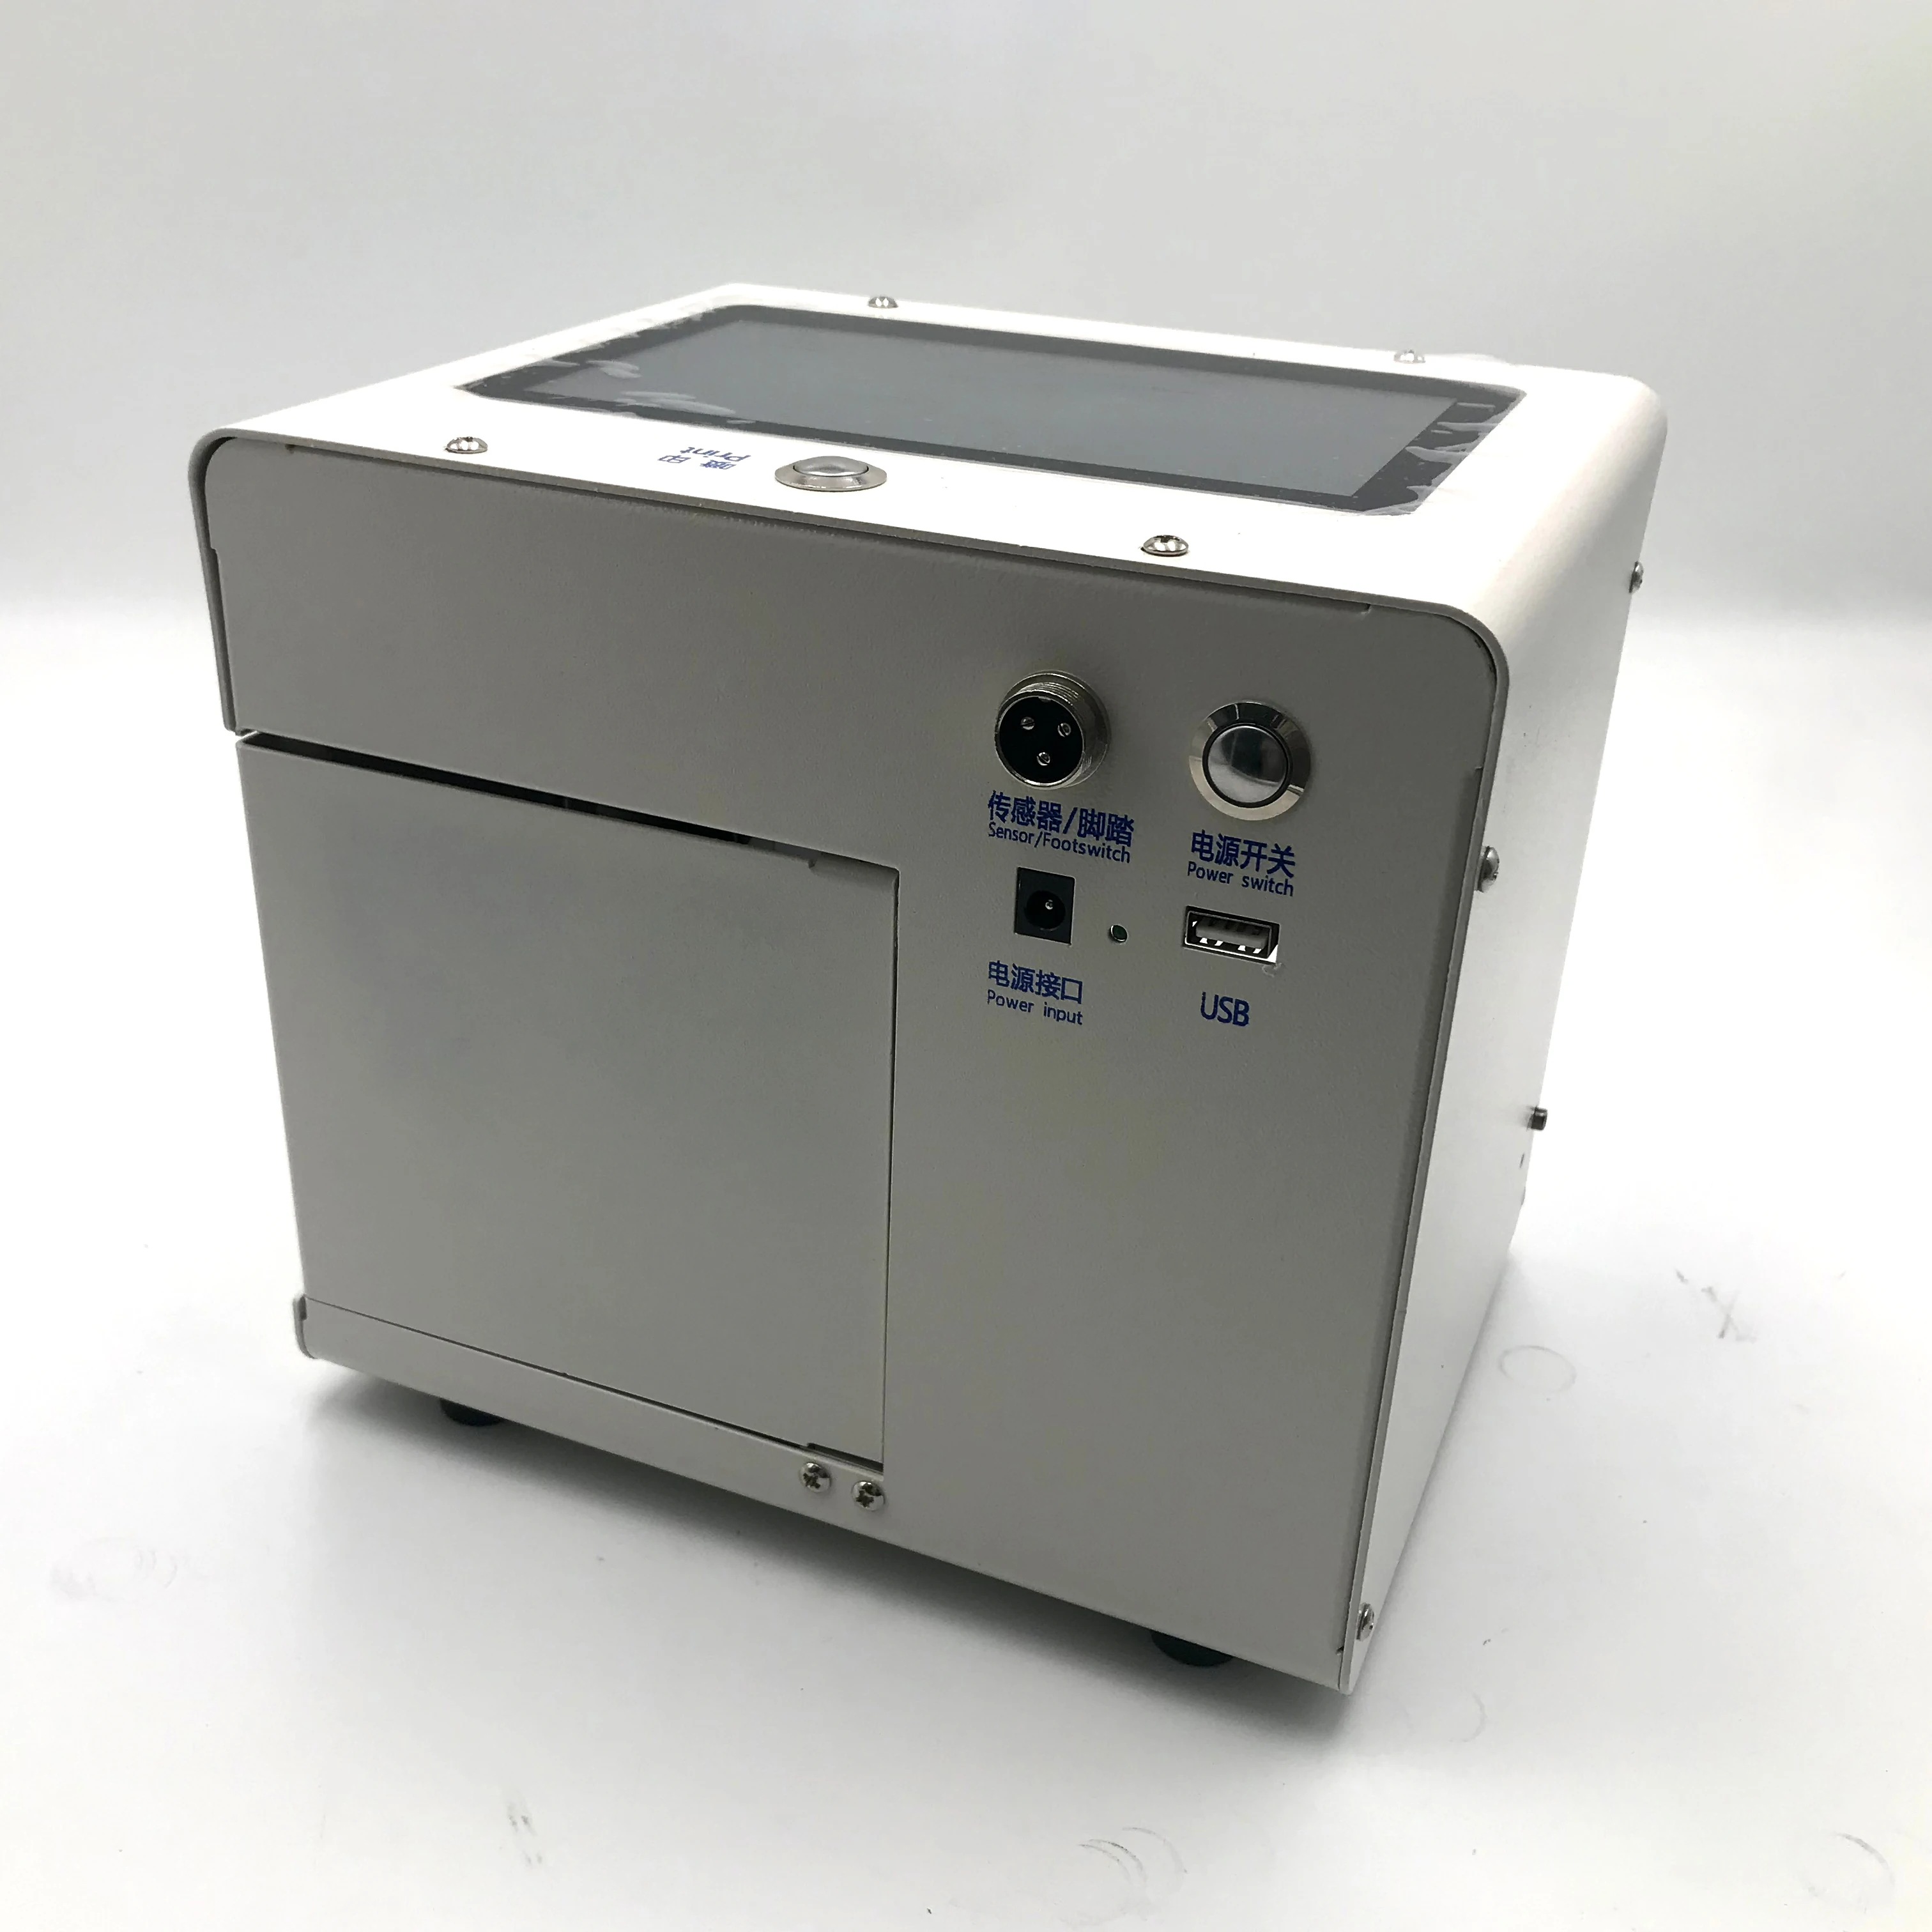 Static Handheld Date Coding Machine Inkjet Printer OH-188 for Plastic, Wood, Aluminum Platinum, Carton, Electronic Products.